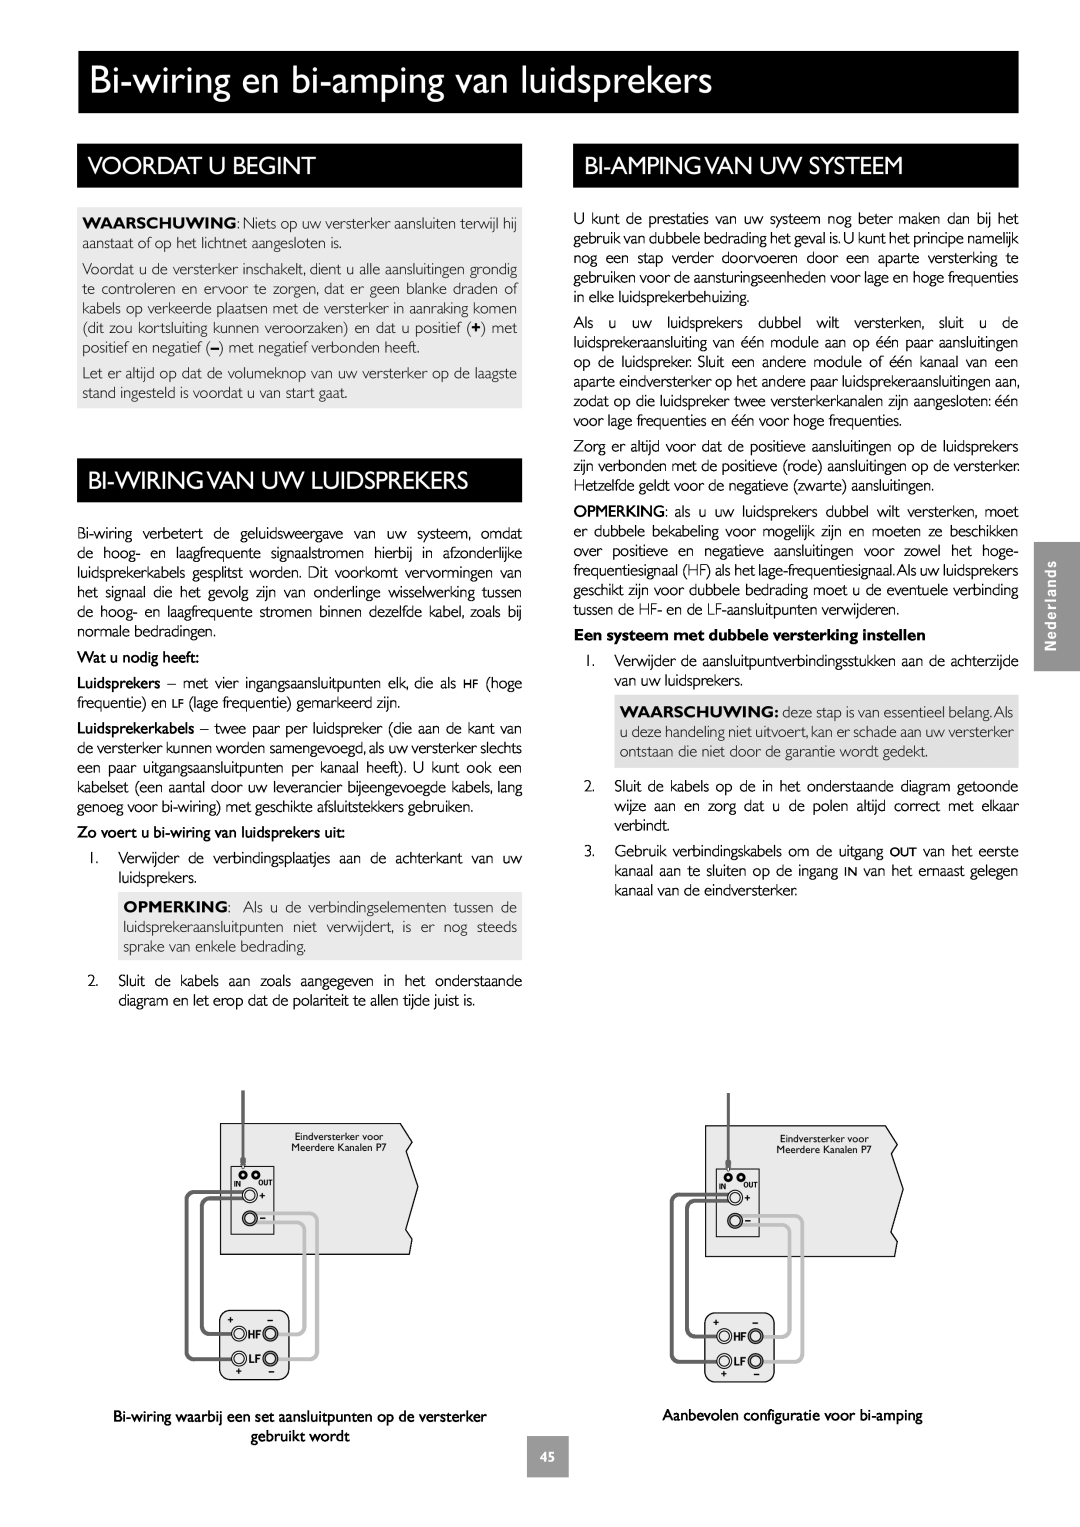 Arcam Multichannel Power Amplifier Bi-wiringen bi-ampingvan luidsprekers, Voordat U Begint, Bi-Wiringvanuw Luidsprekers 